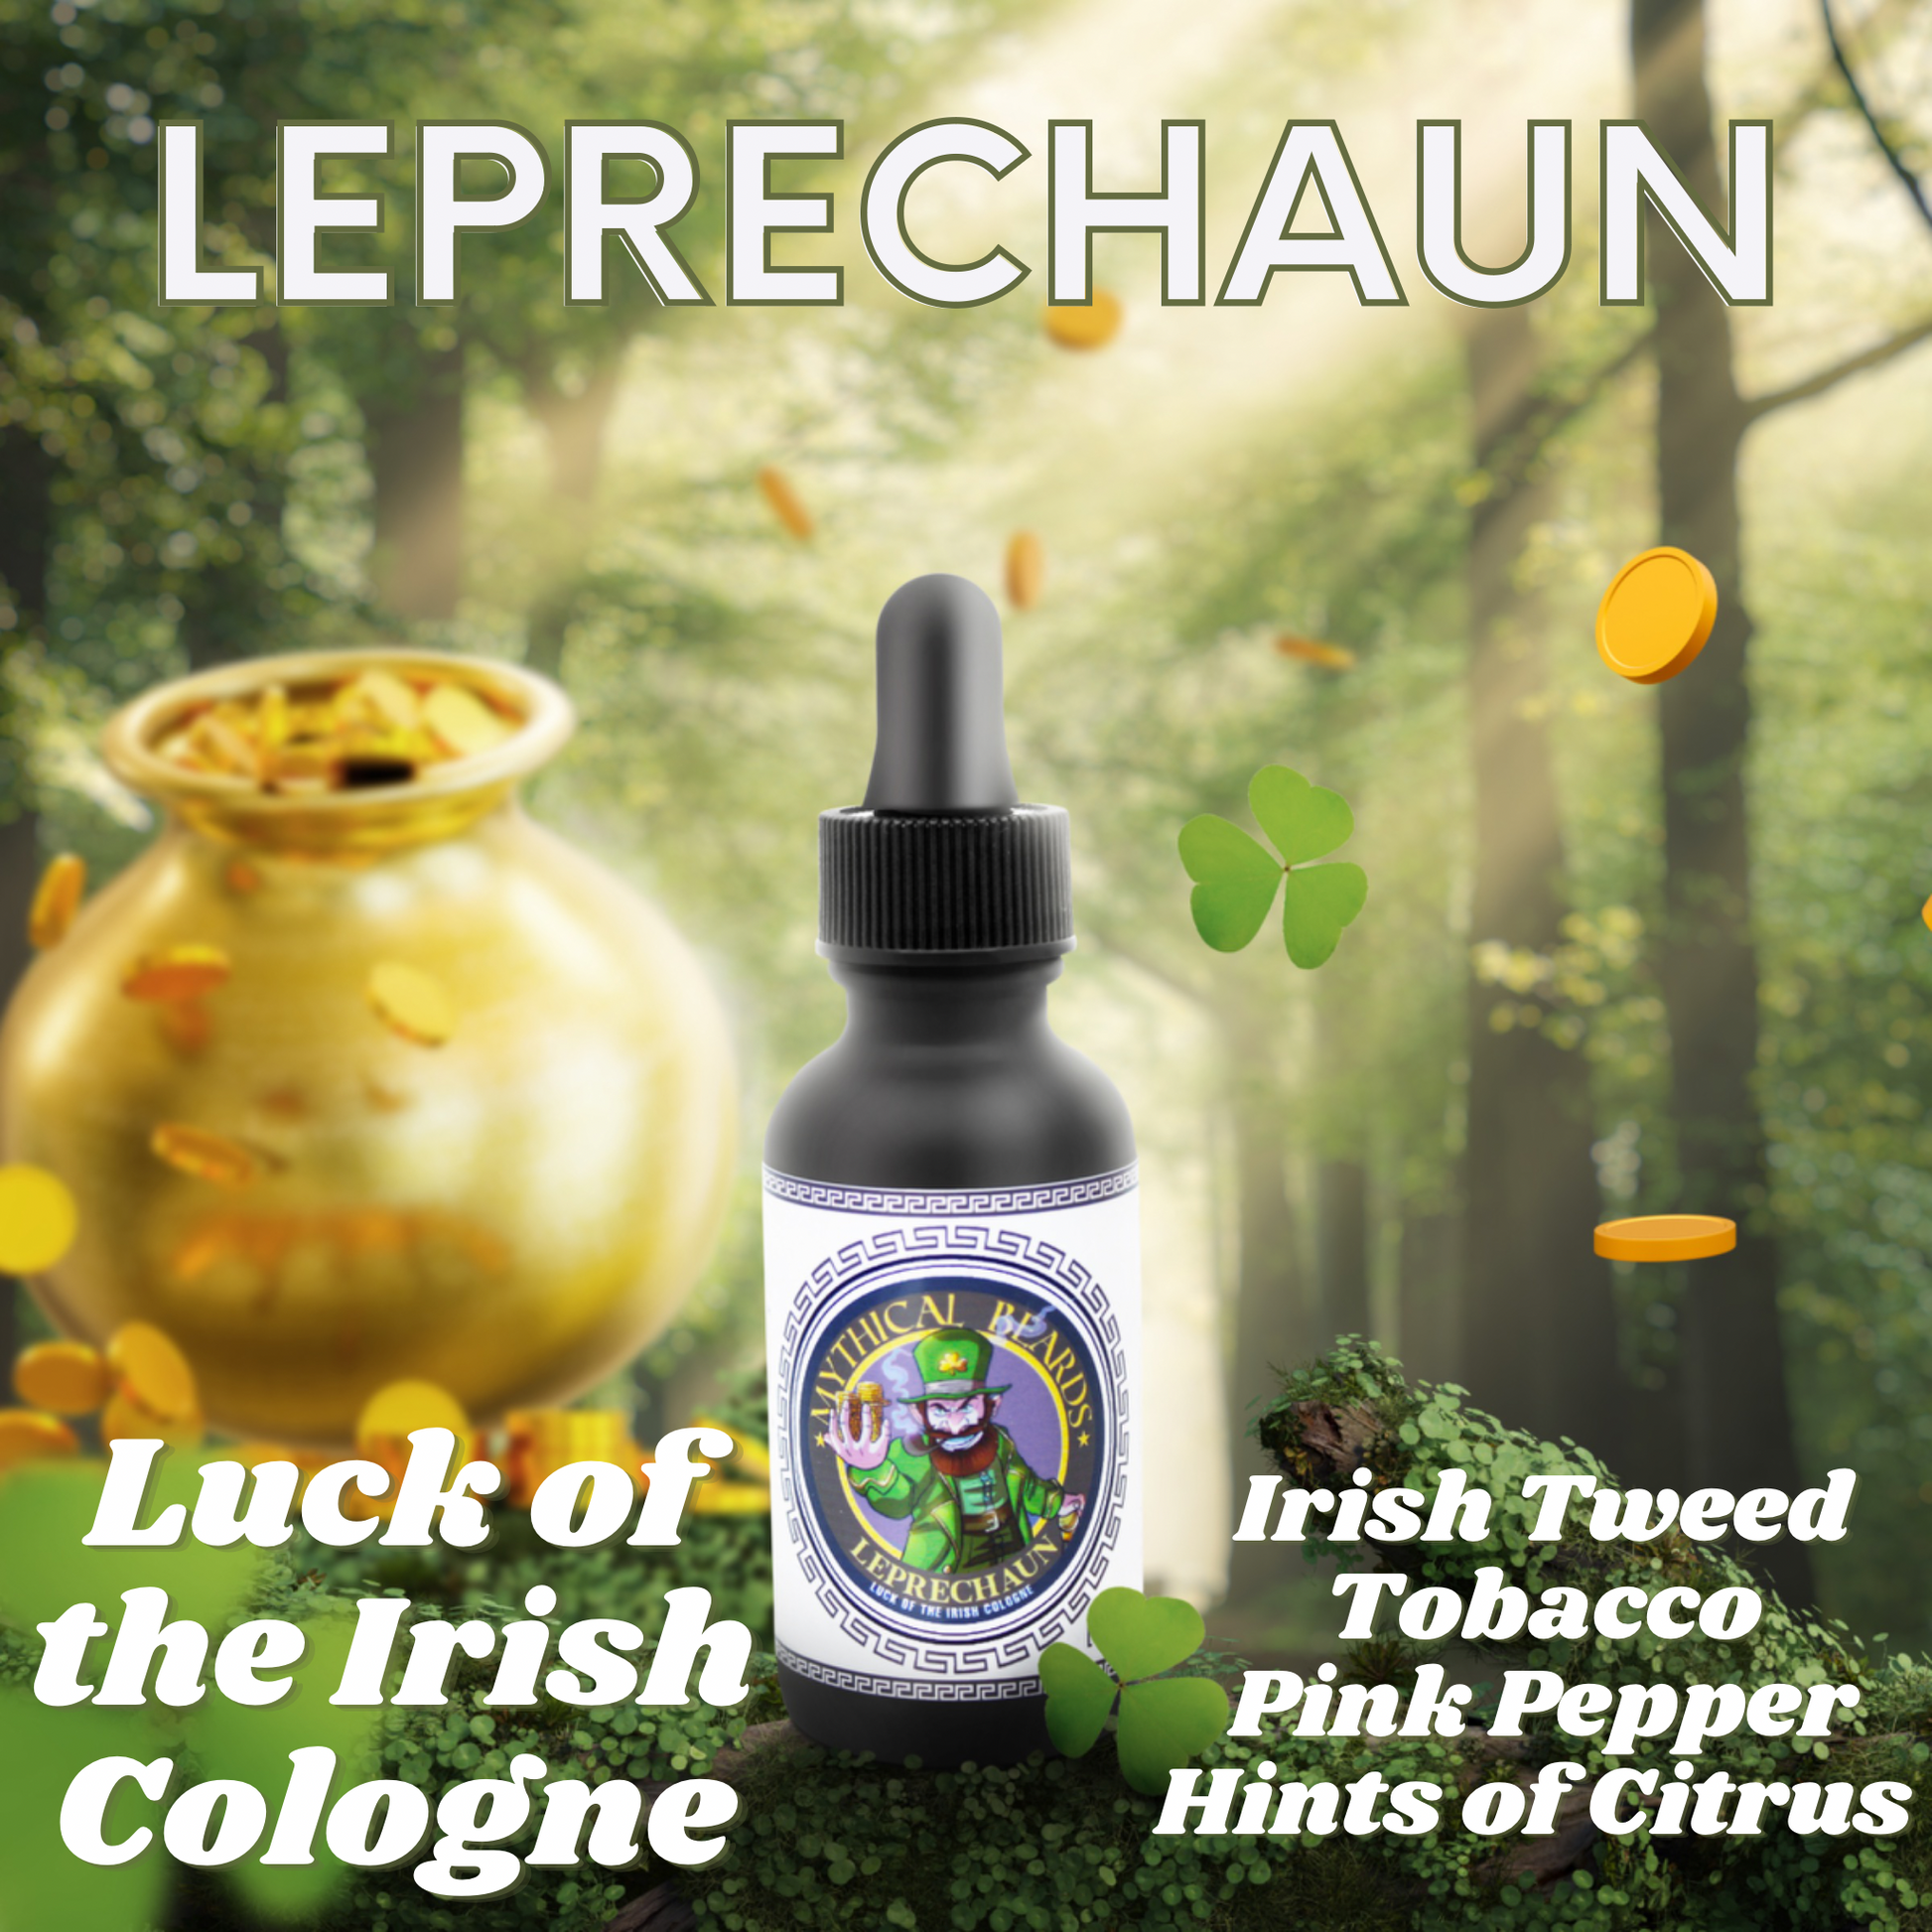 Leprechaun - Luck of the Irish Cologne - Irish Tweed, Tobacco, Pink Pepper, Suede, Citrus